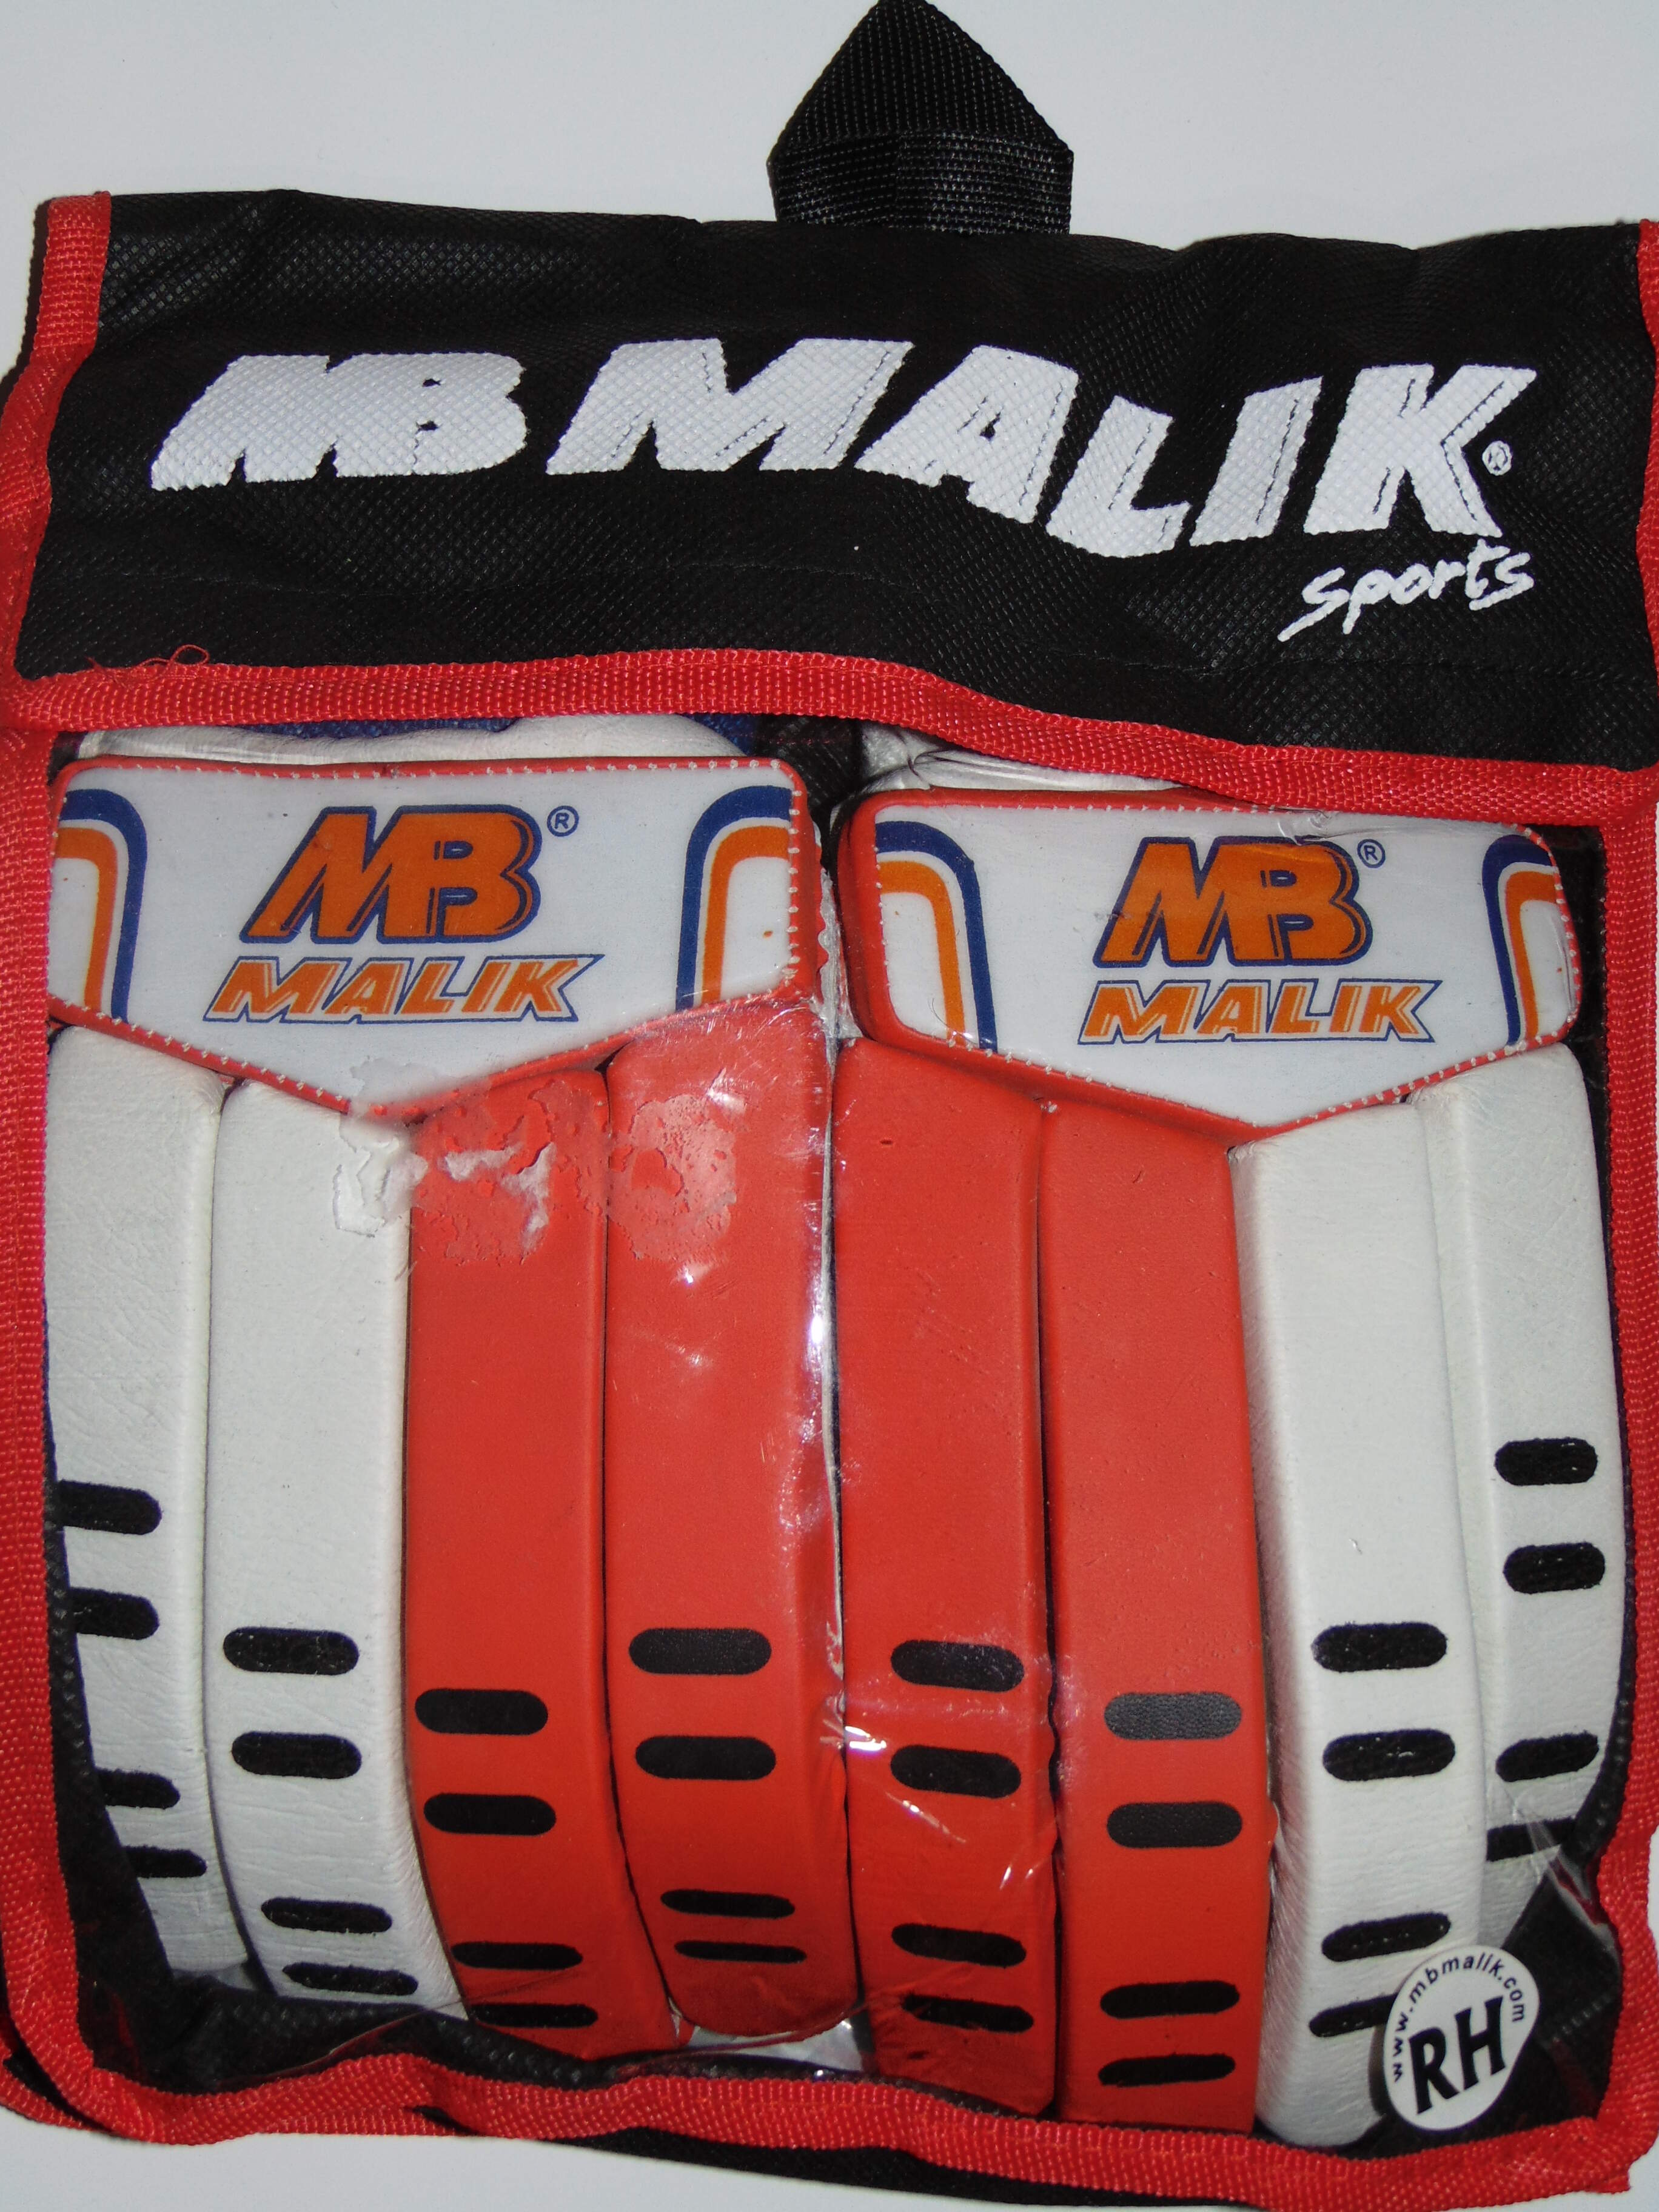 MB Malik Supreme Mens Cricket Batting Gloves Size R/Hand was £ 19.99